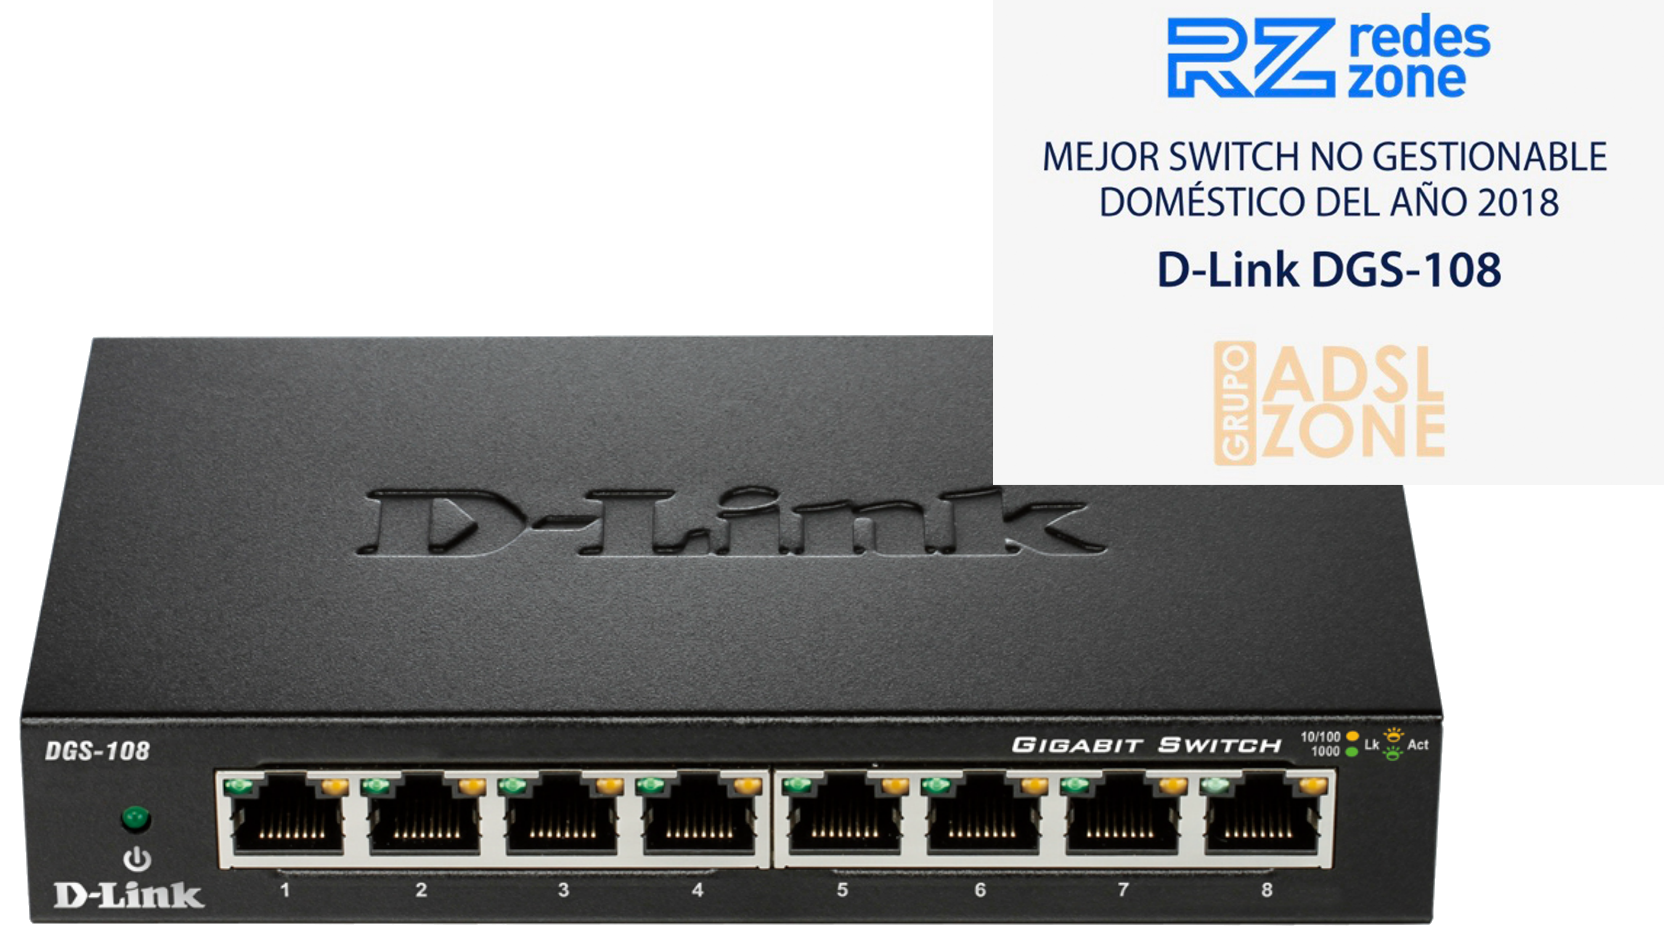 D-Link DGS-1008P Switch 8 puertos